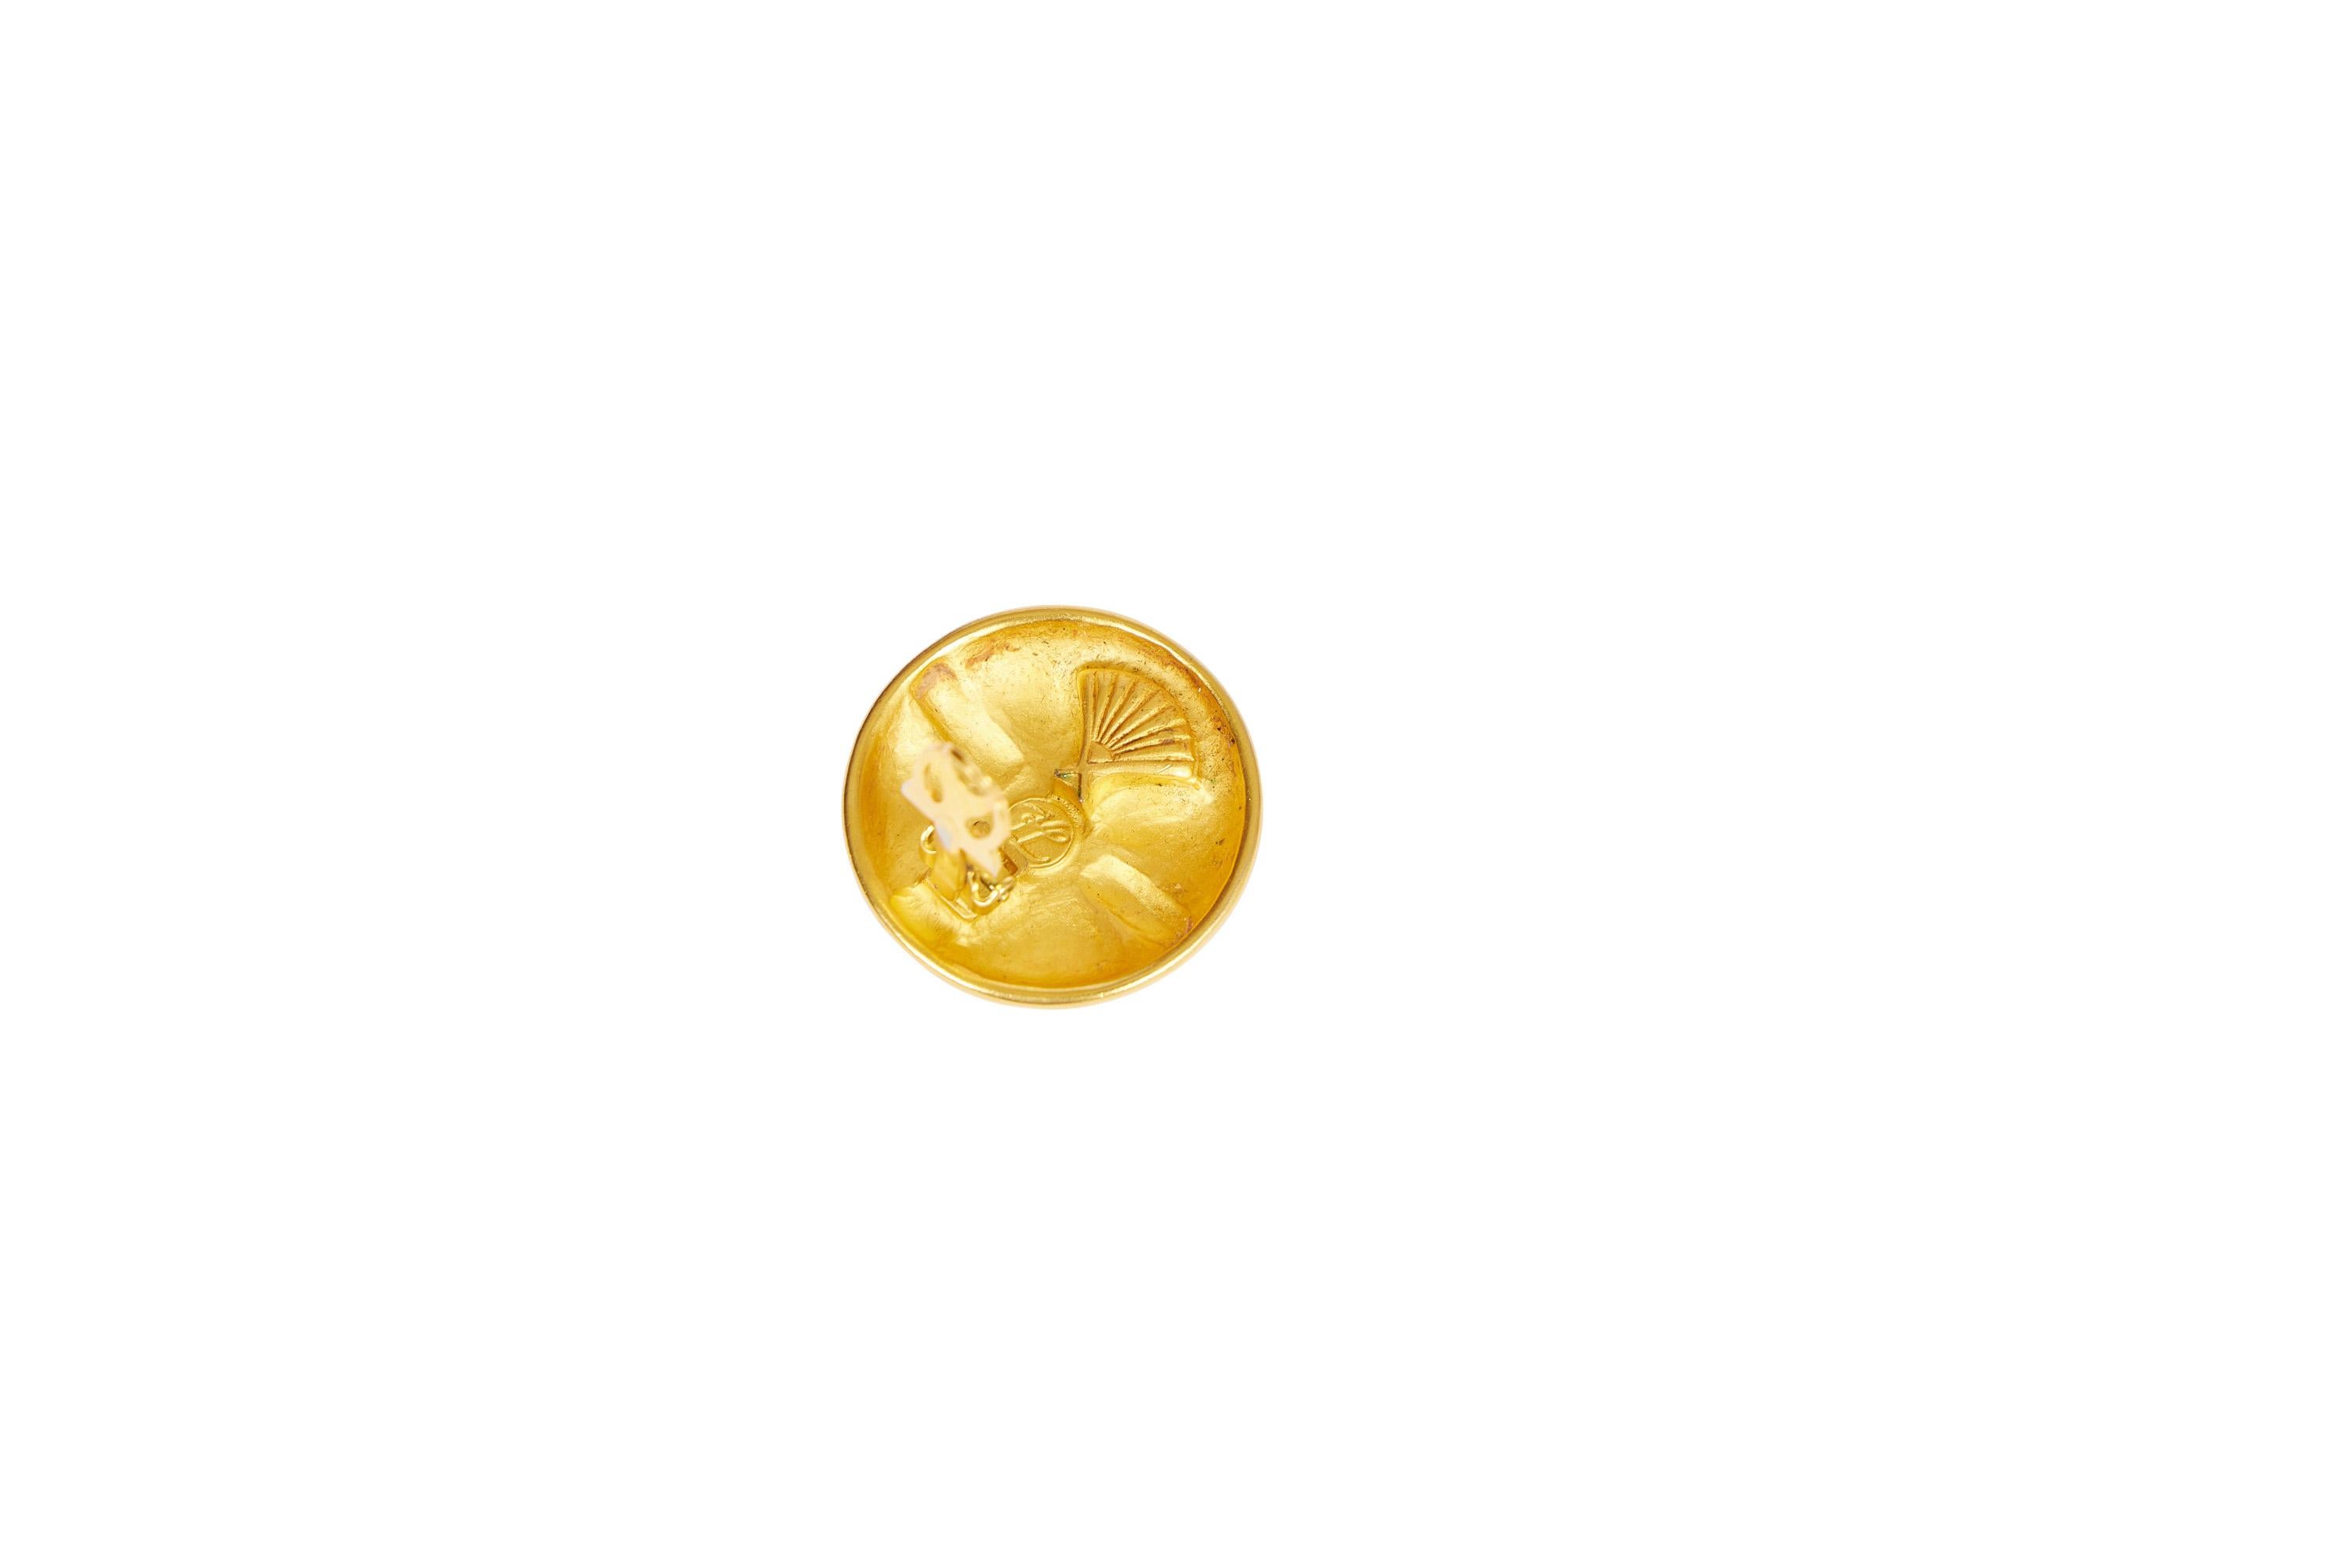 Karl Lagerfeld satin gold multiple logo clip earrings. Come with velvet pouch or box.
